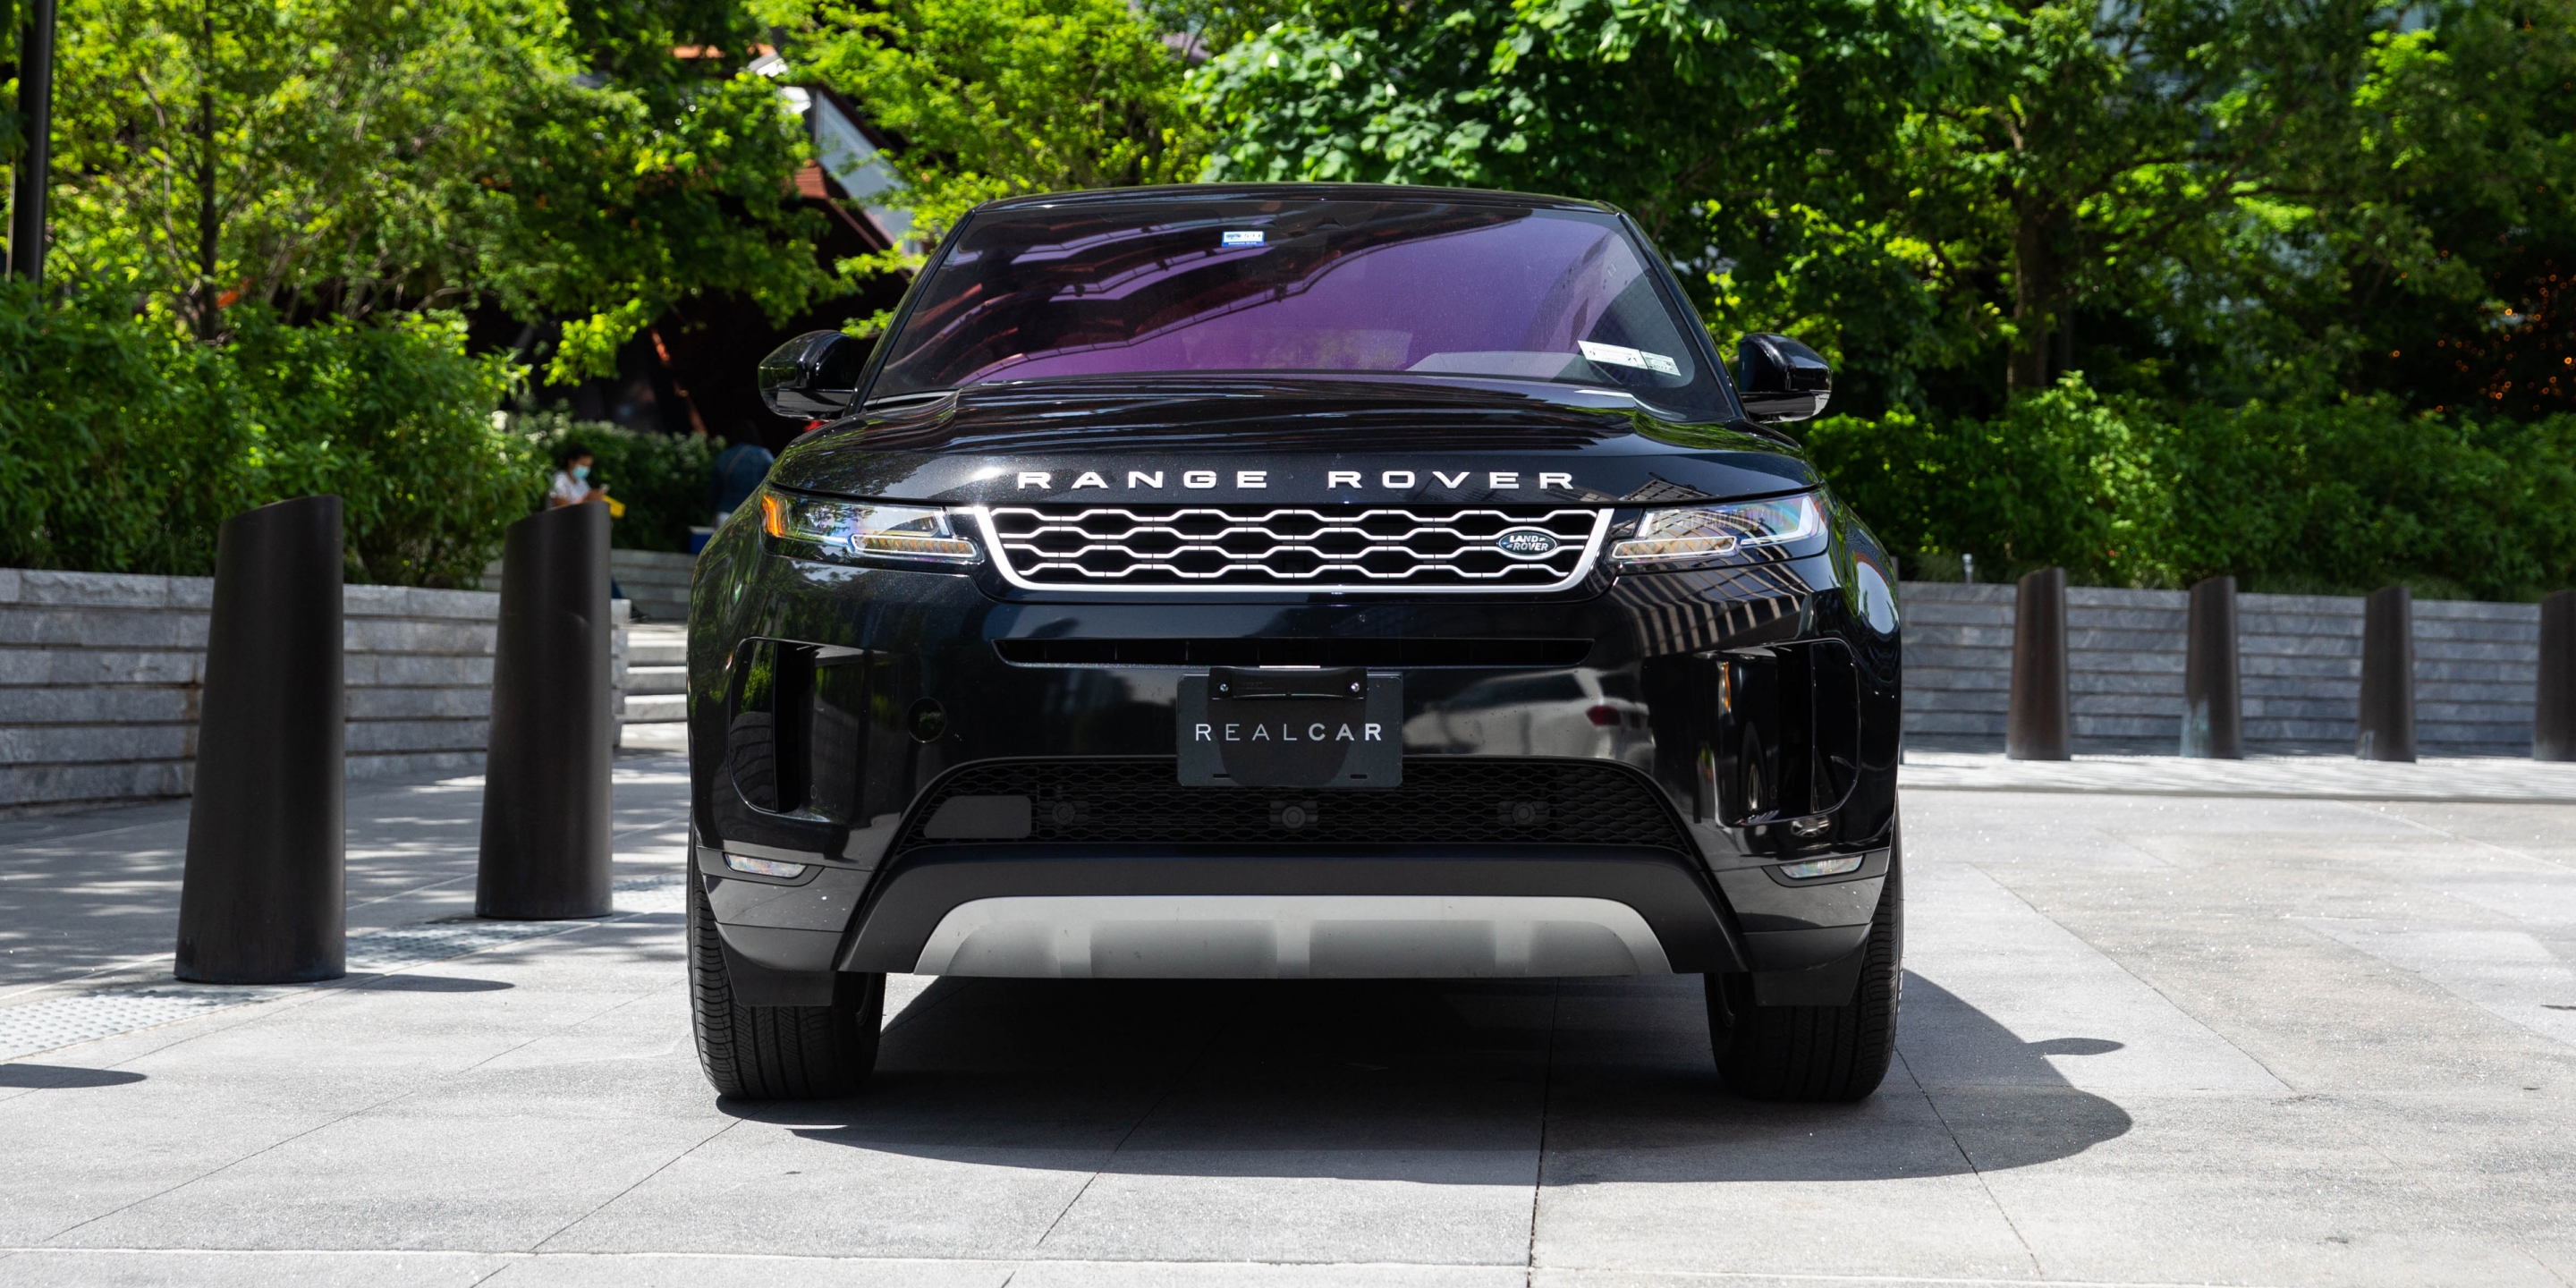 RealCar Range Rover Evoque for rental